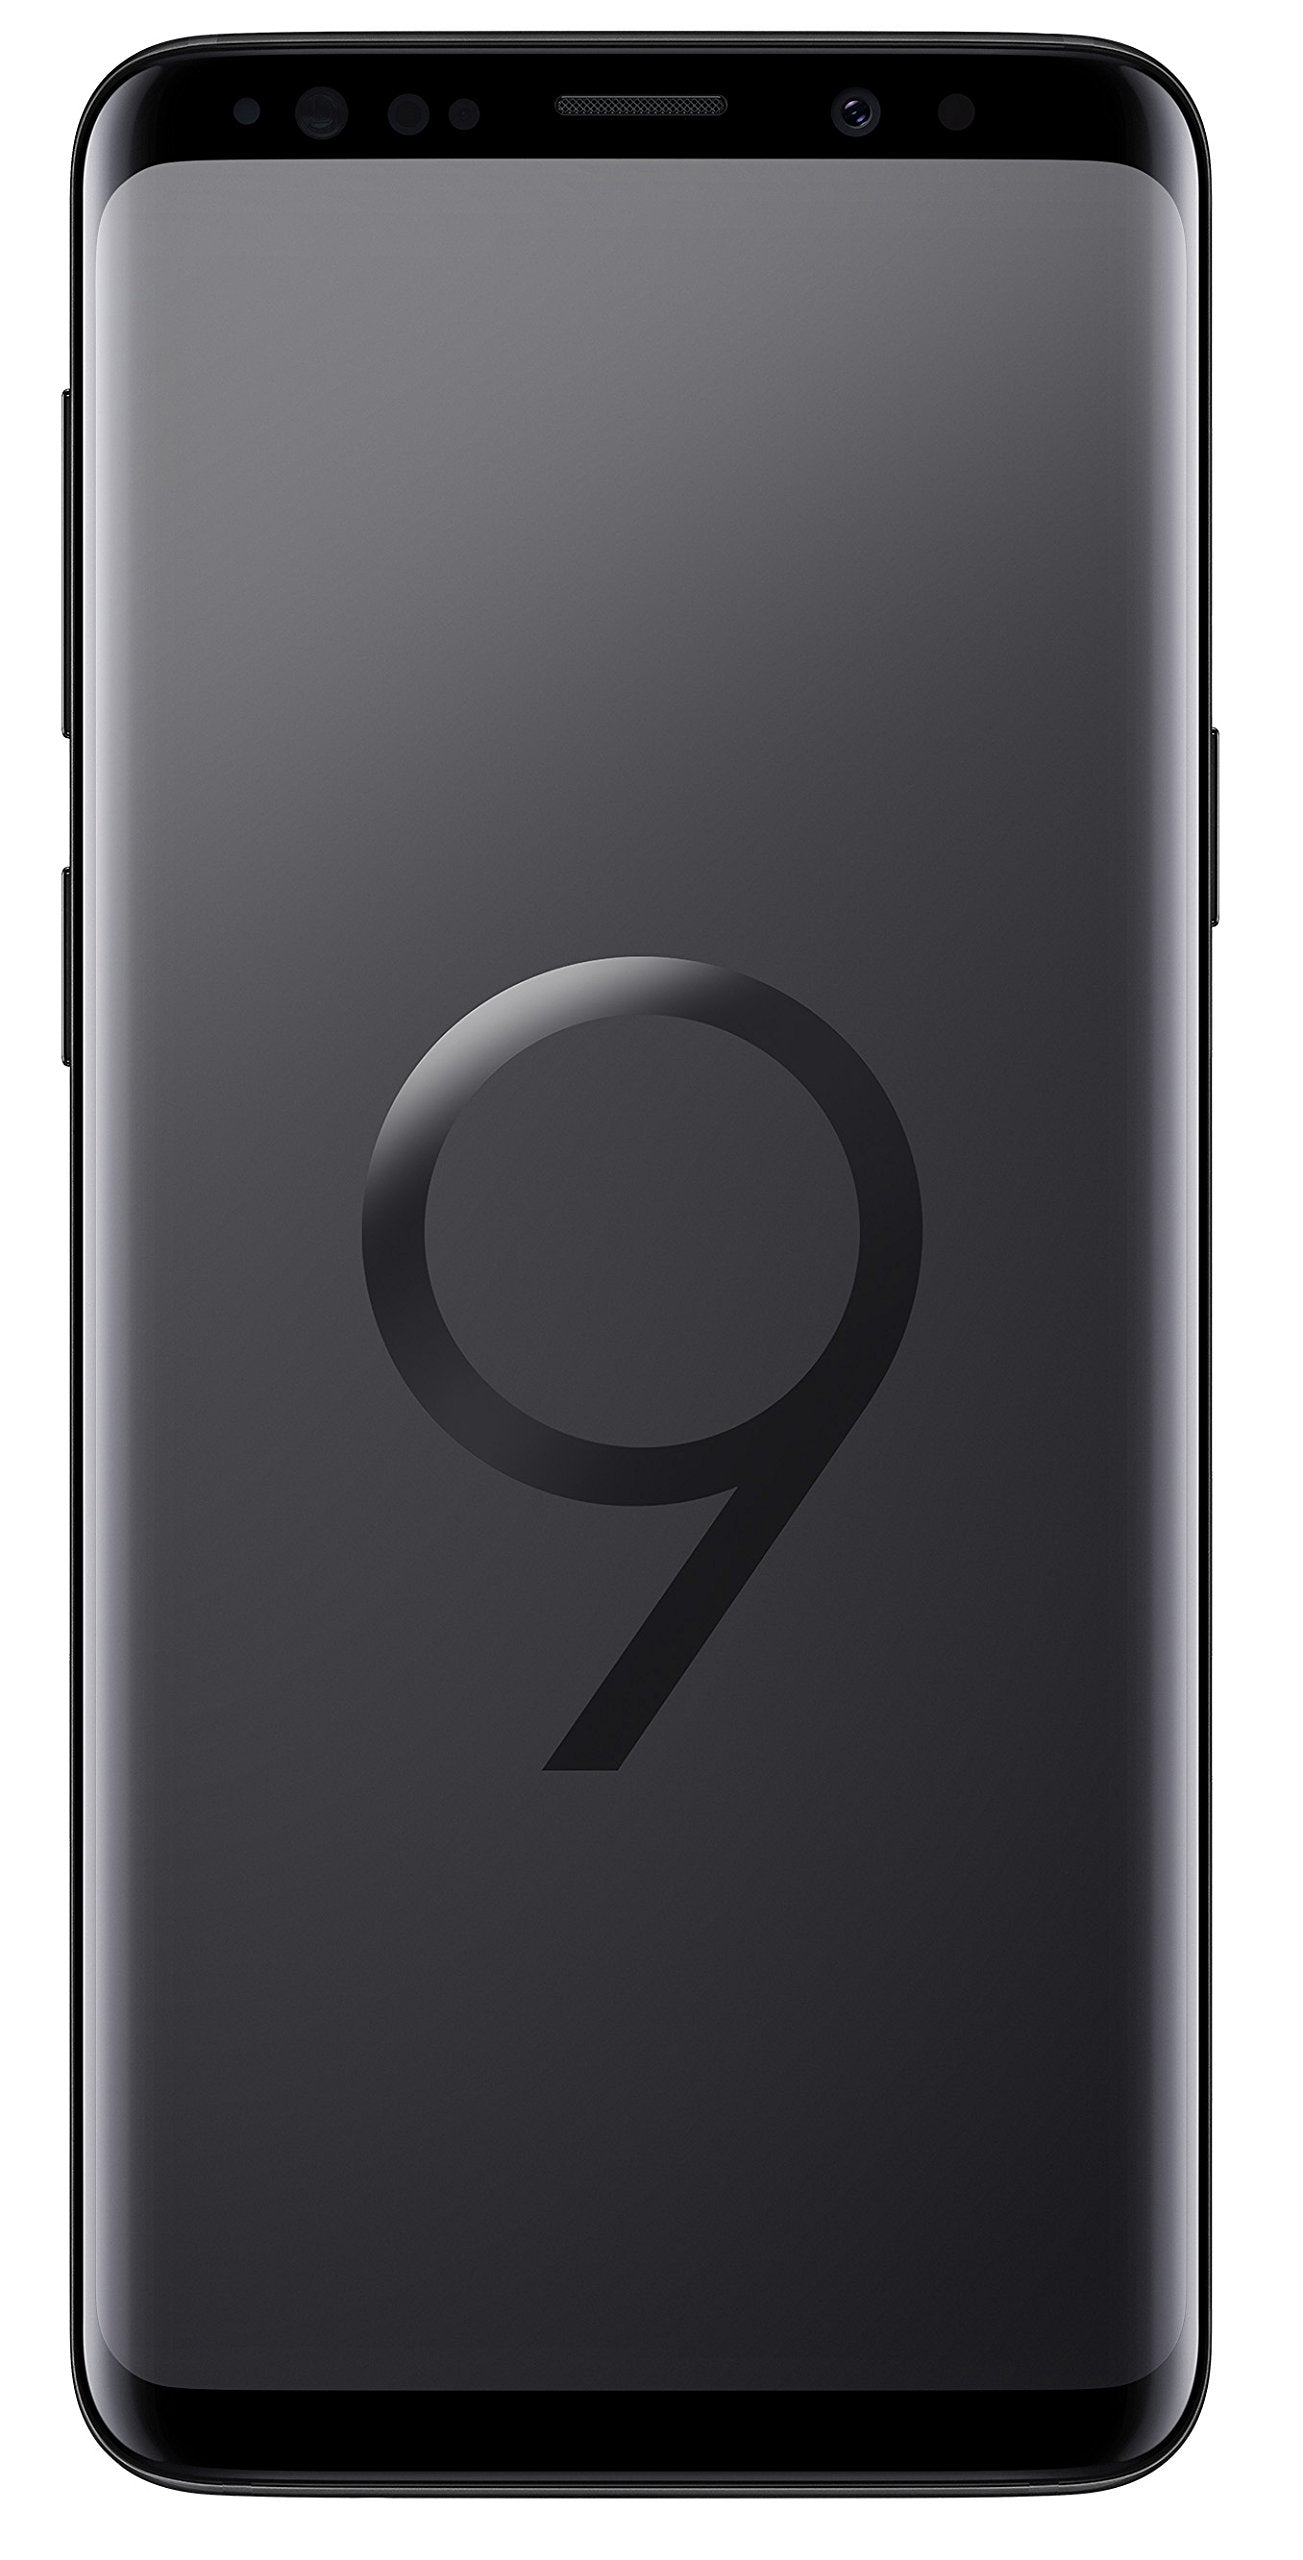 Samsung Galaxy S9 64GB - Midnight Black - Unlocked (Renewed)